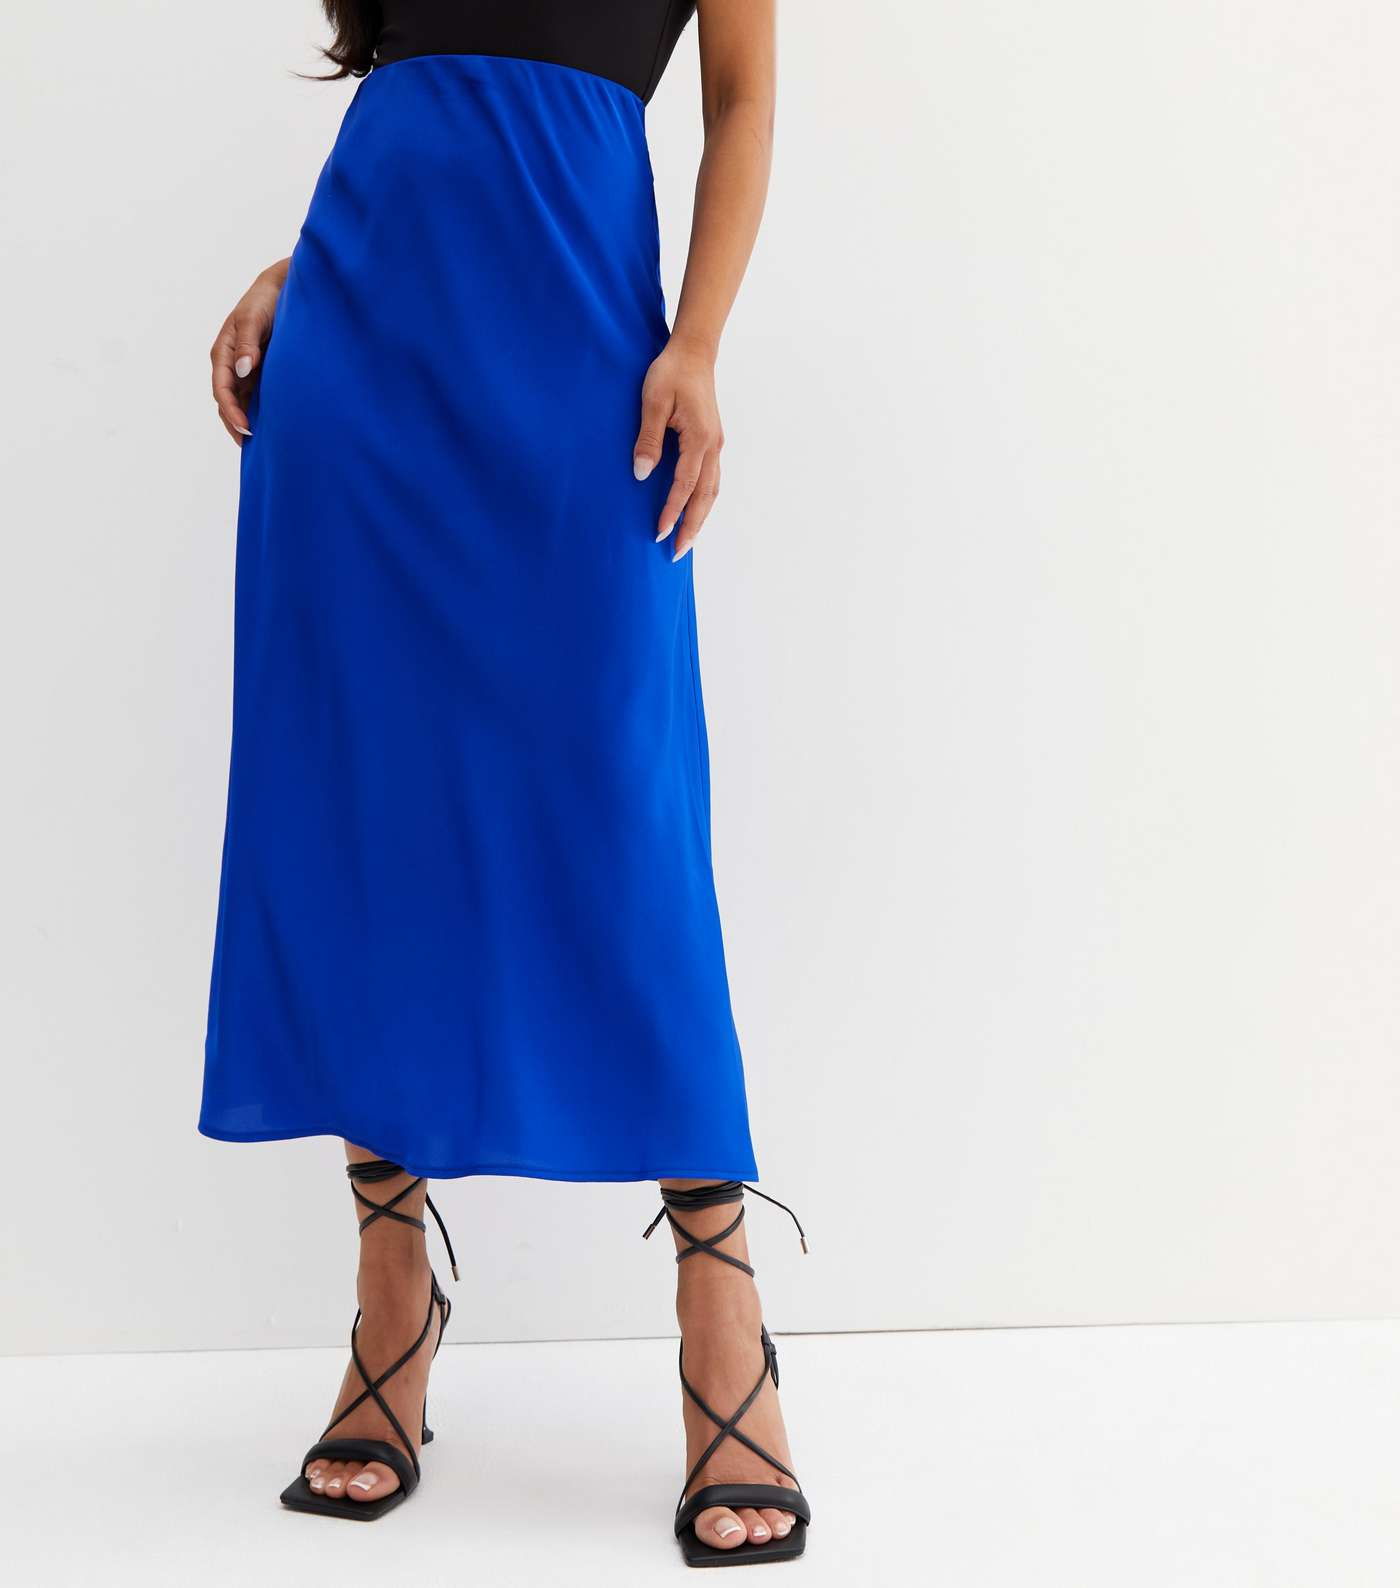 Petite Bright Blue Satin Bias Cut Midi Skirt Image 2